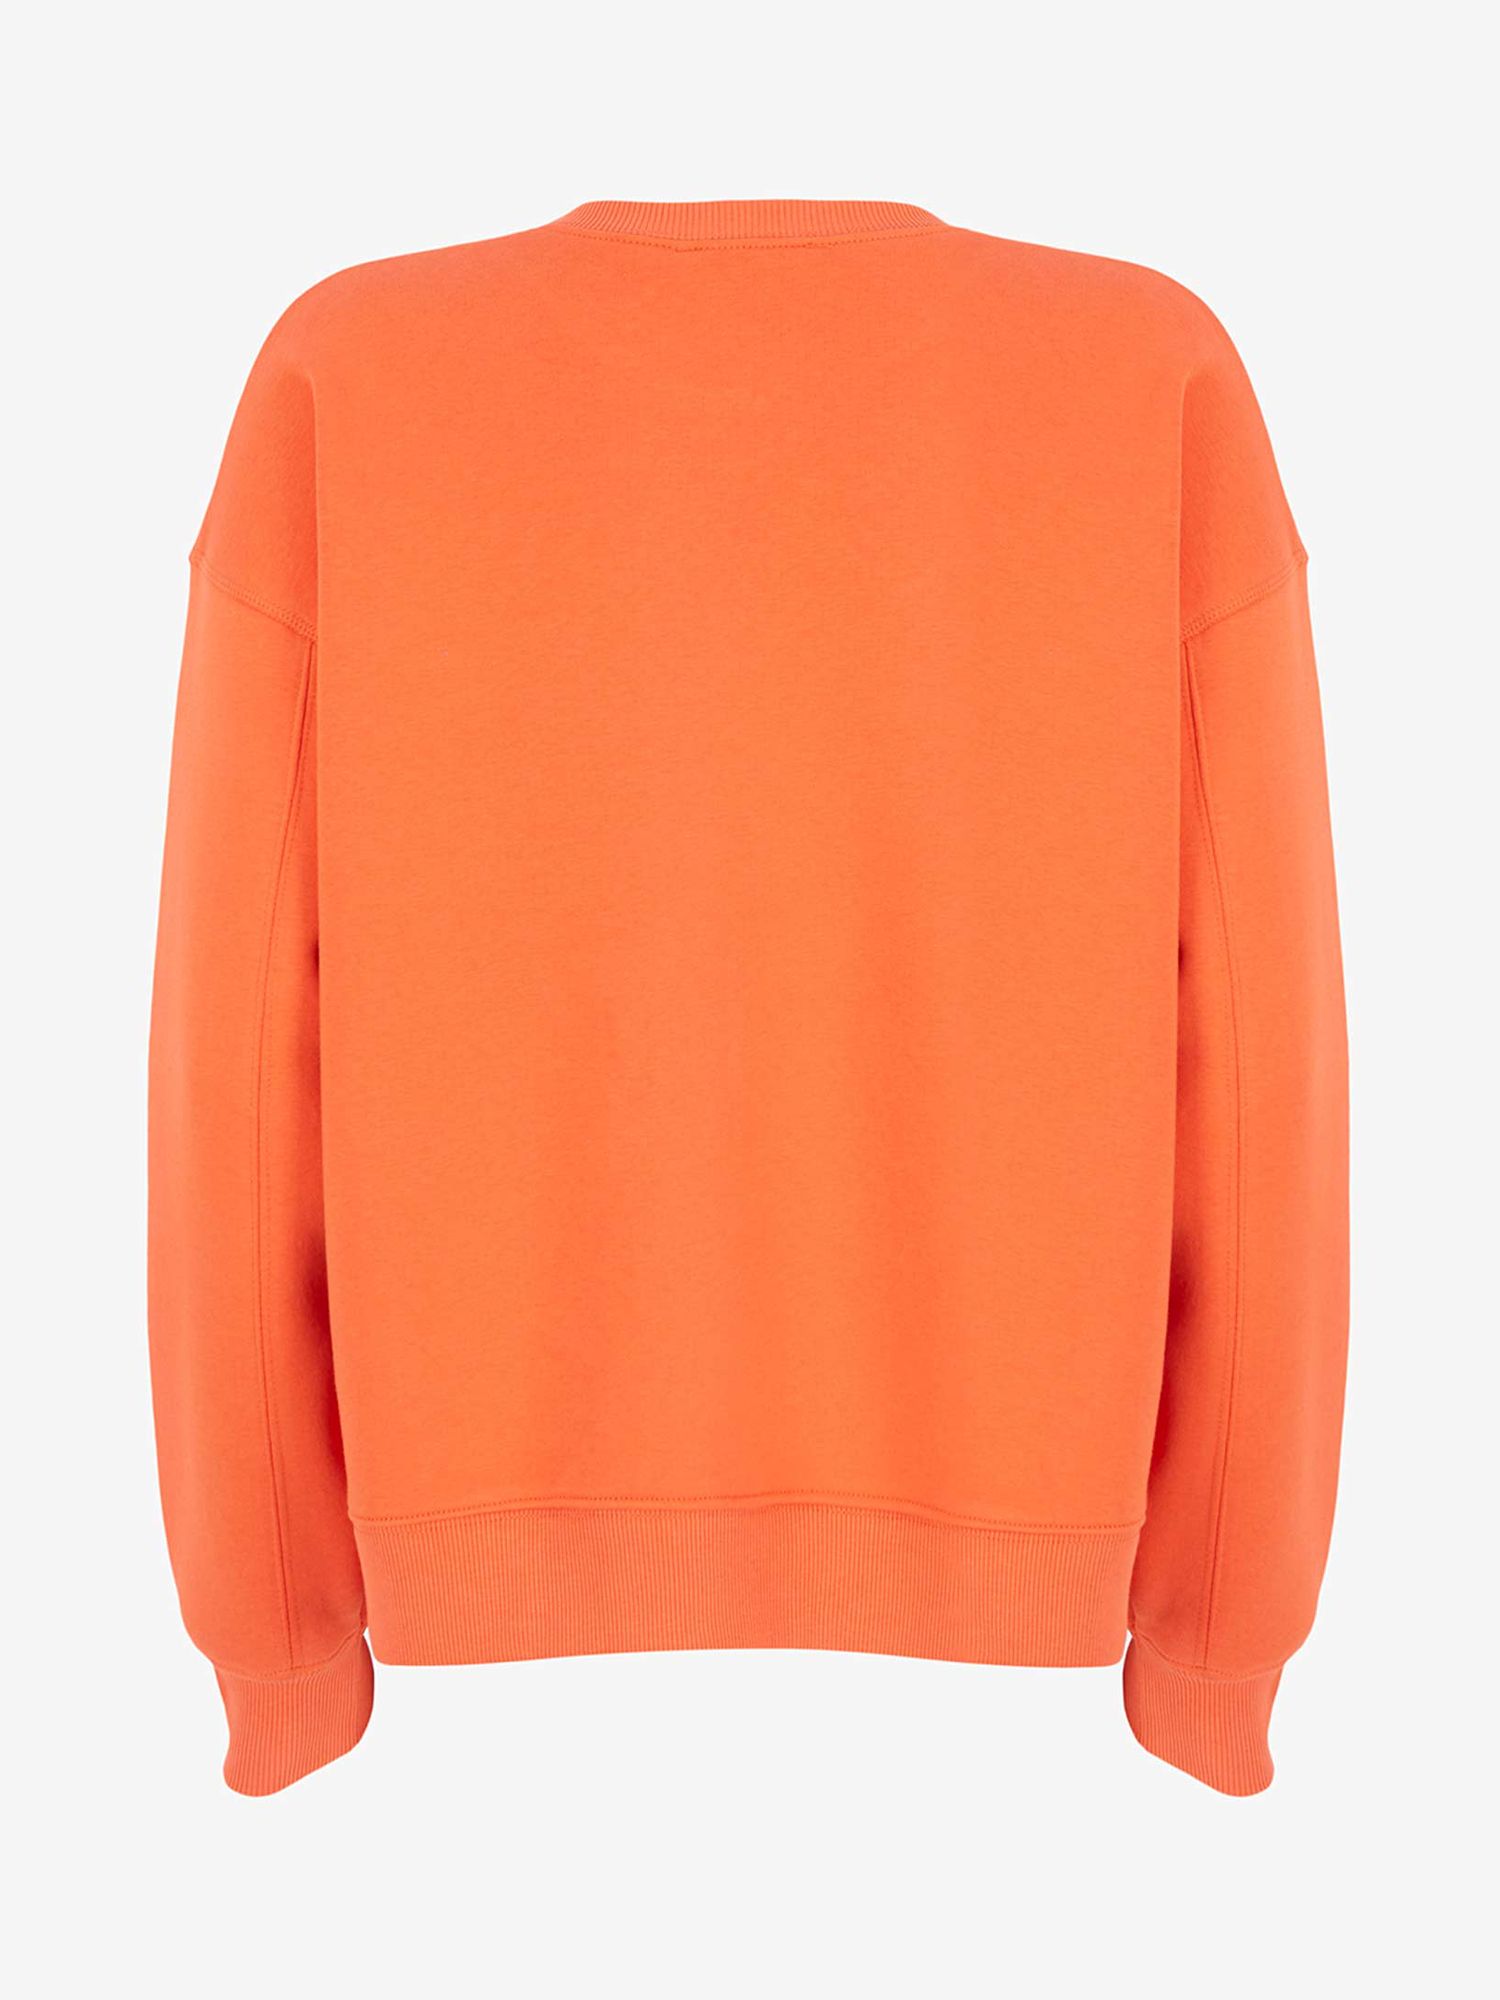 Mint Velvet Side Zip Sweatshirt, Orange at John Lewis & Partners